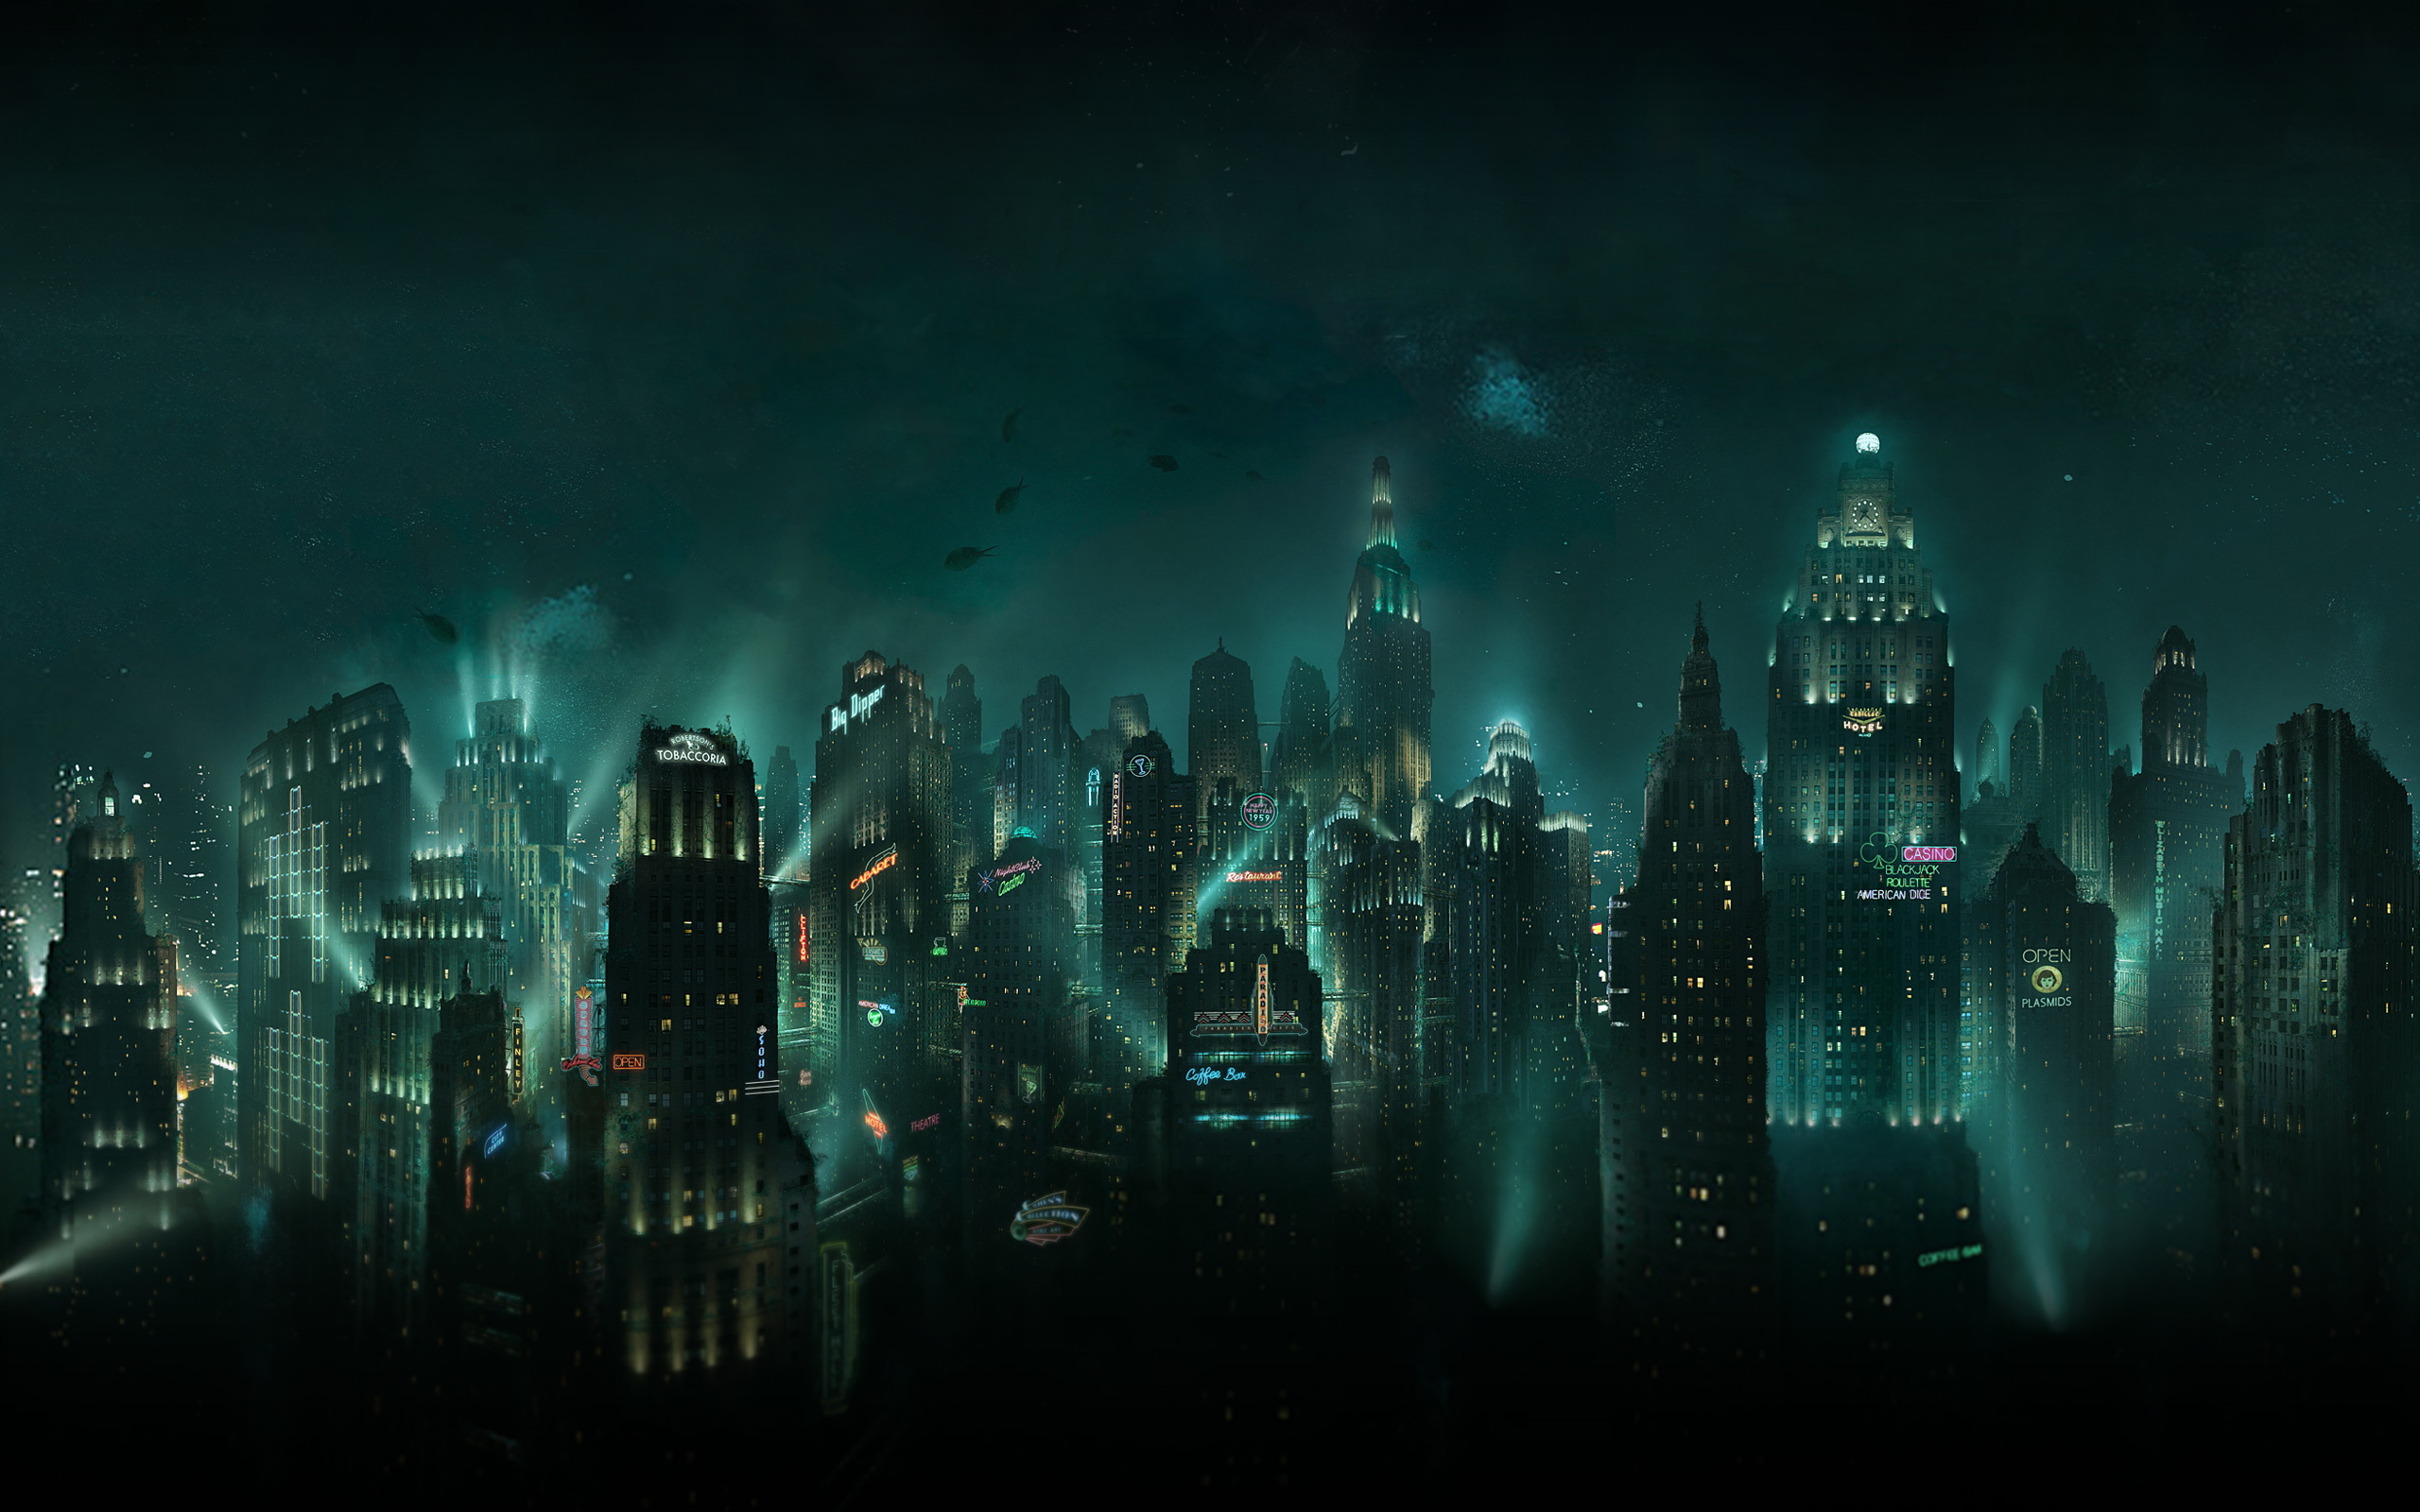 1080p live wallpaper,action adventure game,darkness,city,human settlement,metropolis